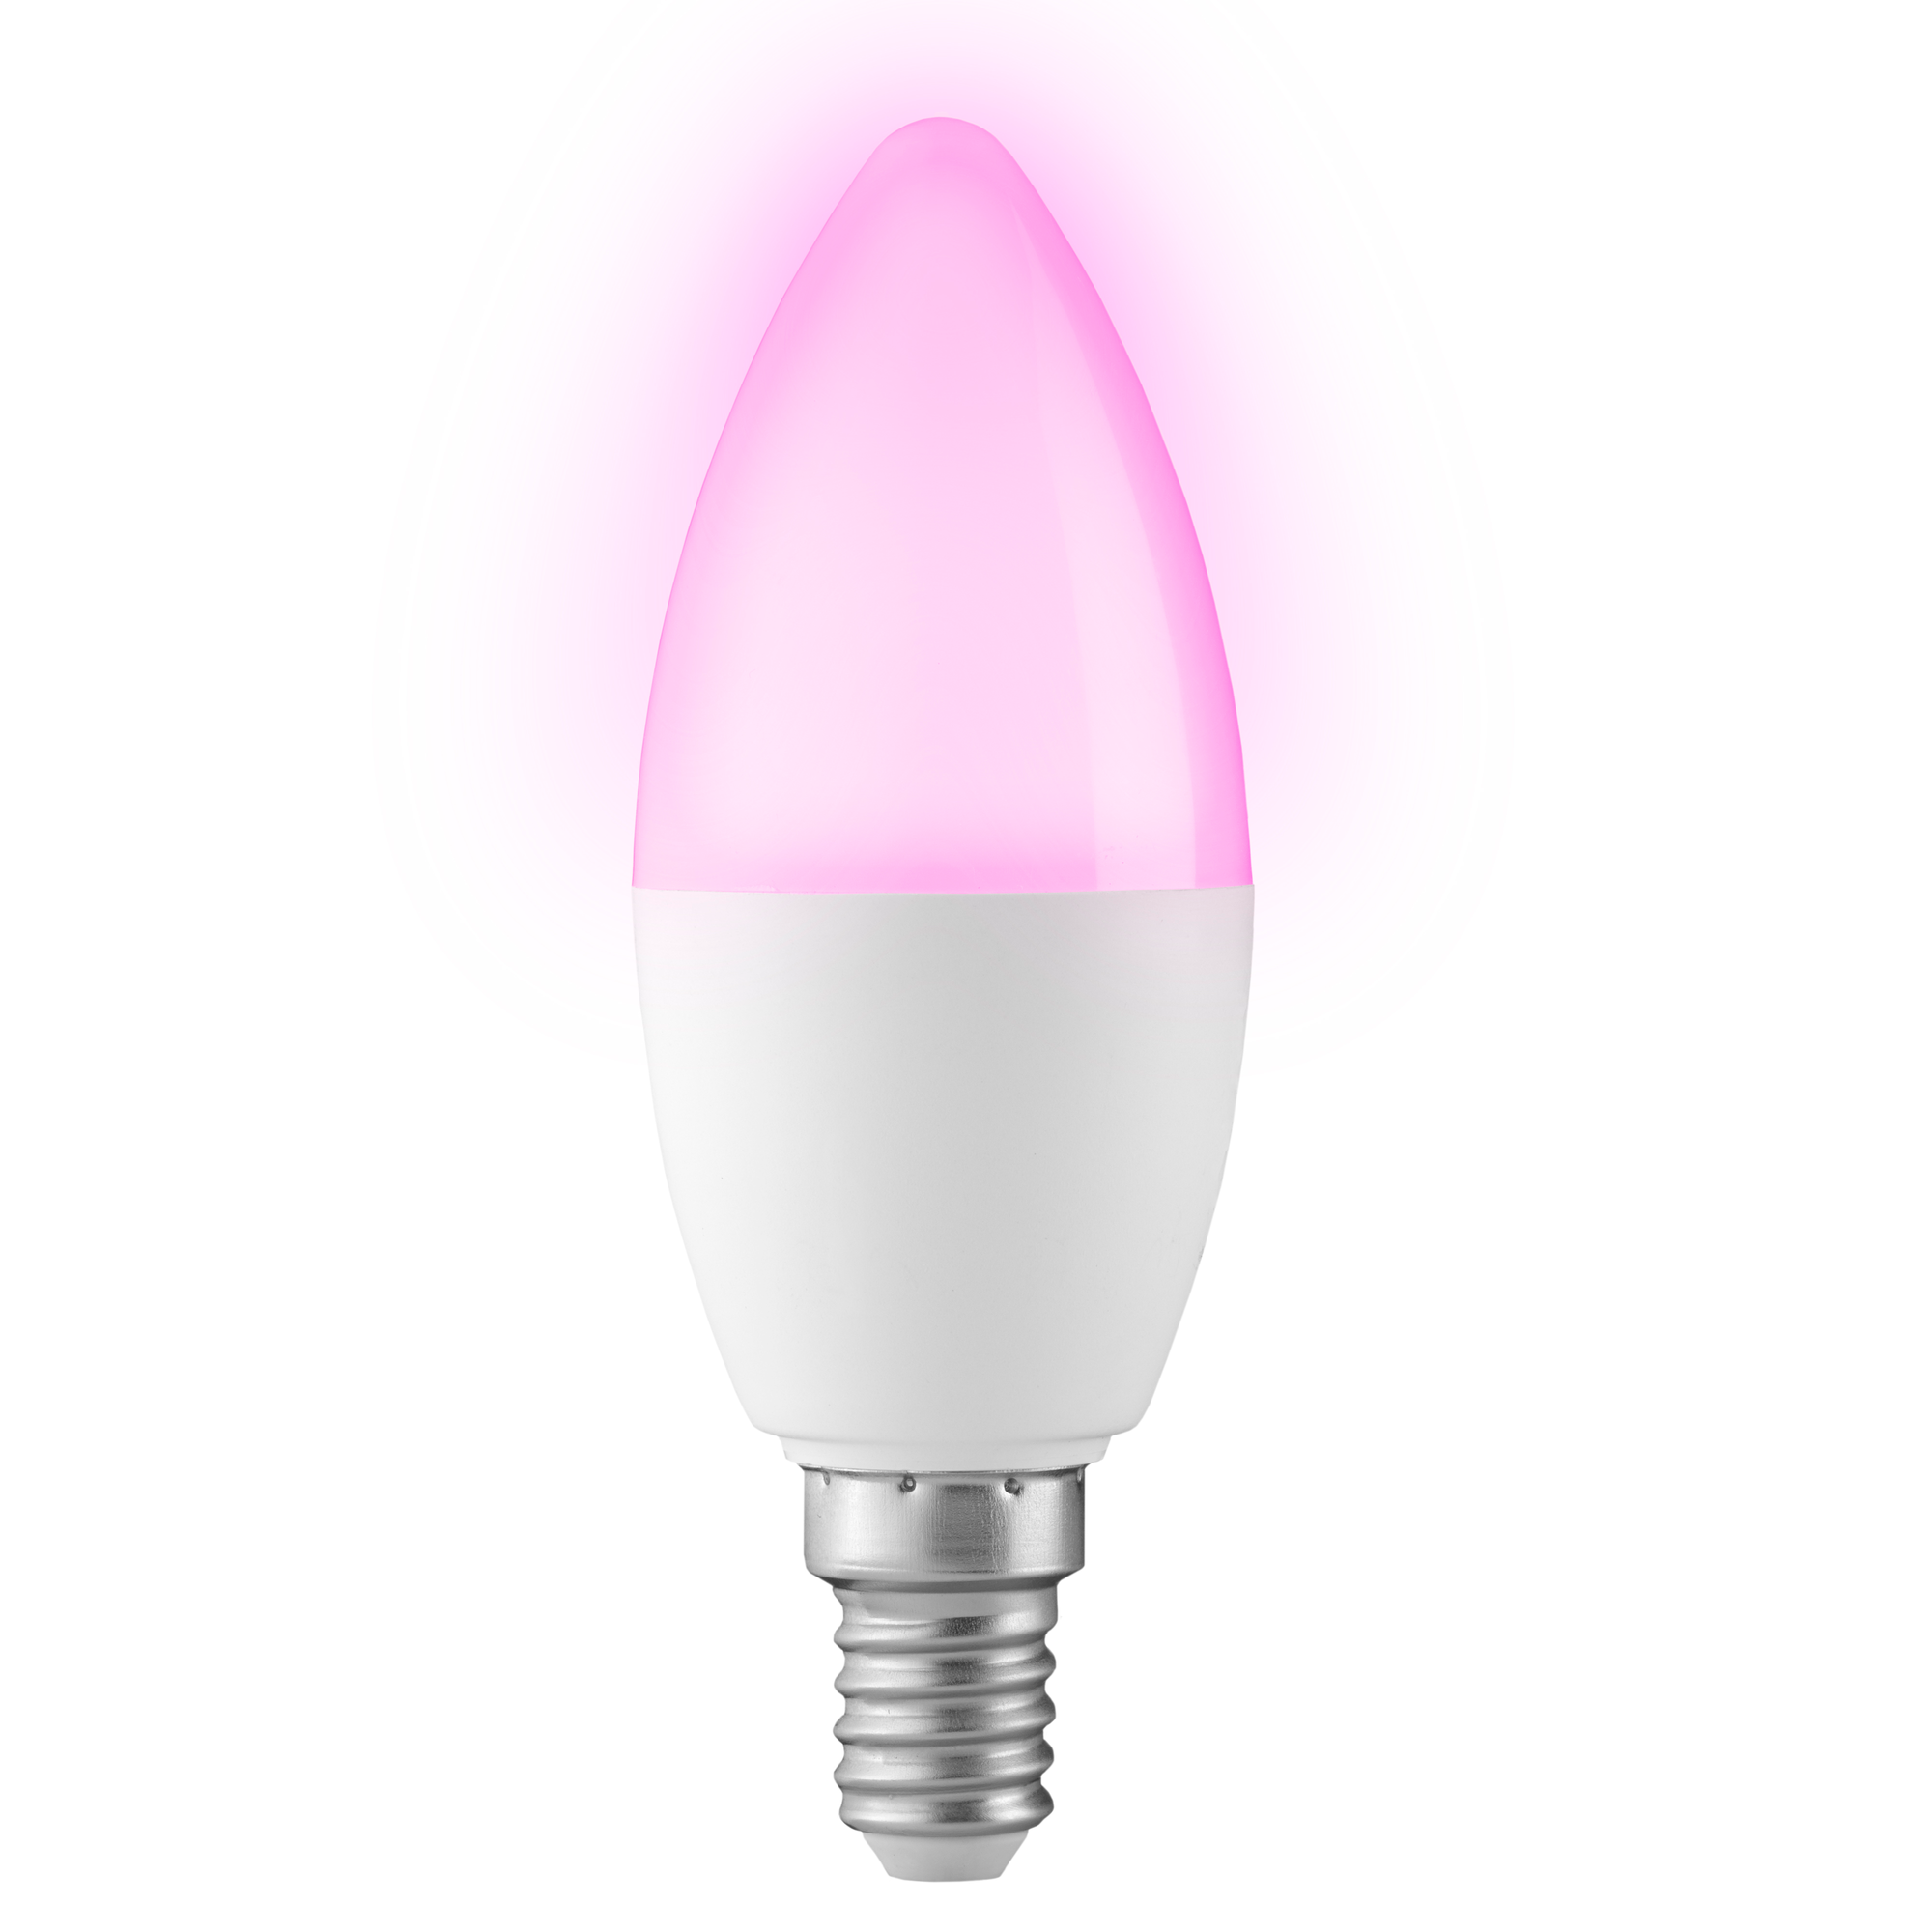 ALECTO smarte,mehrfarbige WLAN-LED-Glühlampe E14-Sockel RGB SMARTLIGHT30 - mit